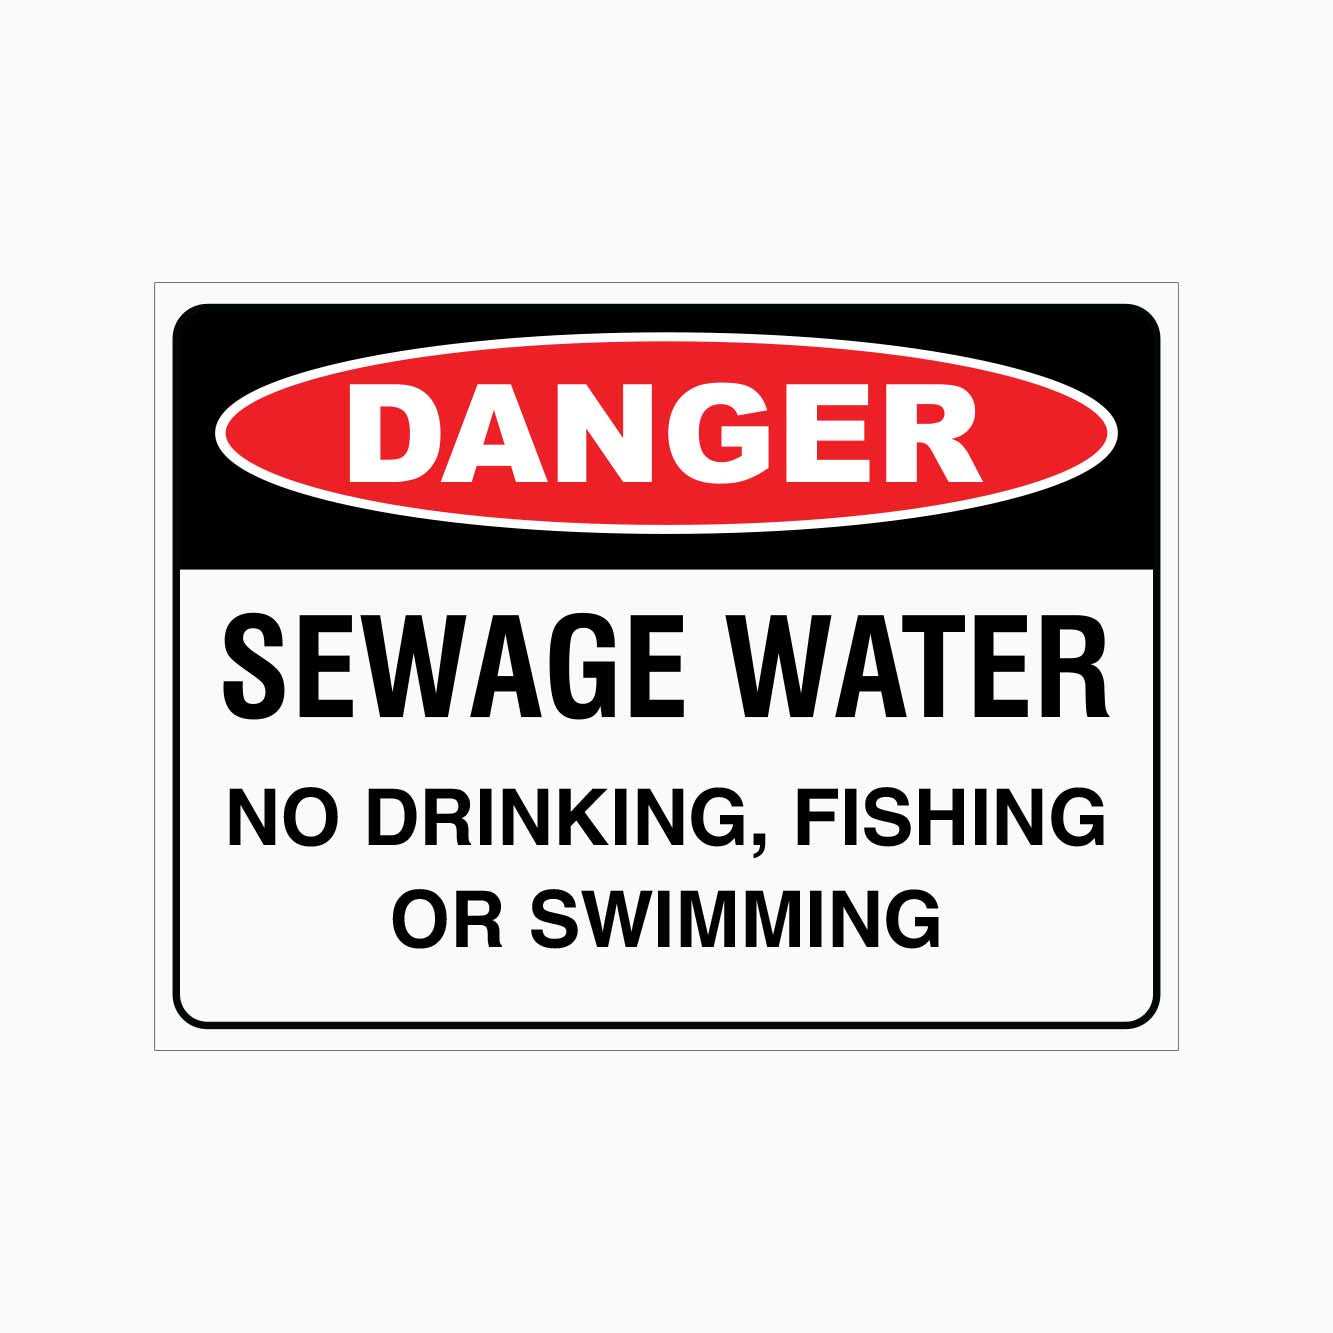 DANGER SEWAGE WATER NO DRINKING, FISHING OR SWIMMING SIGN - GET SIGNS